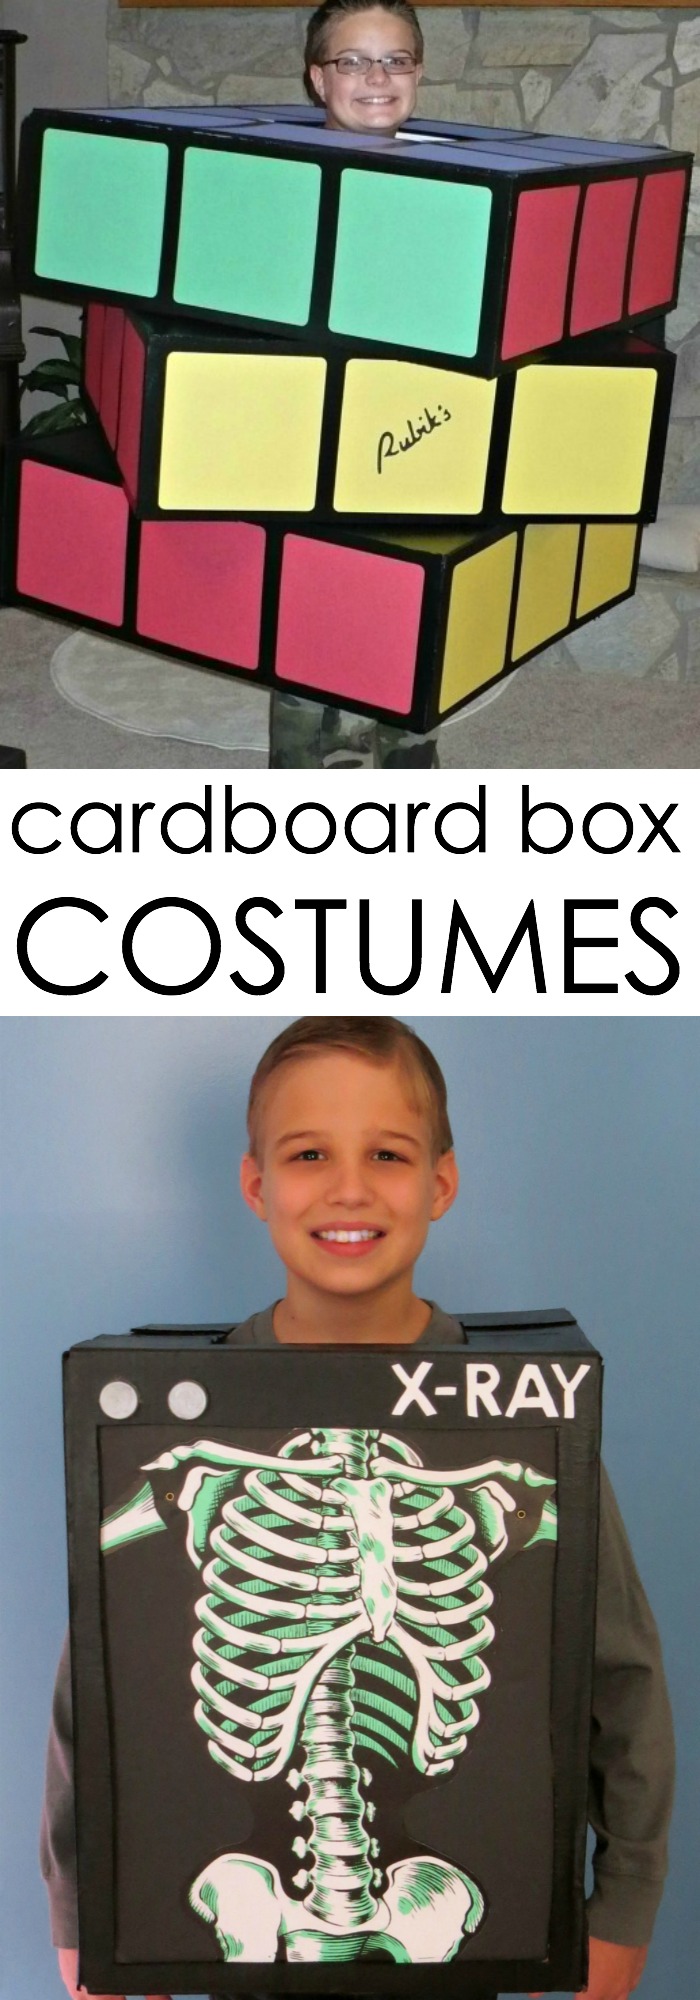 cardboard box costumes